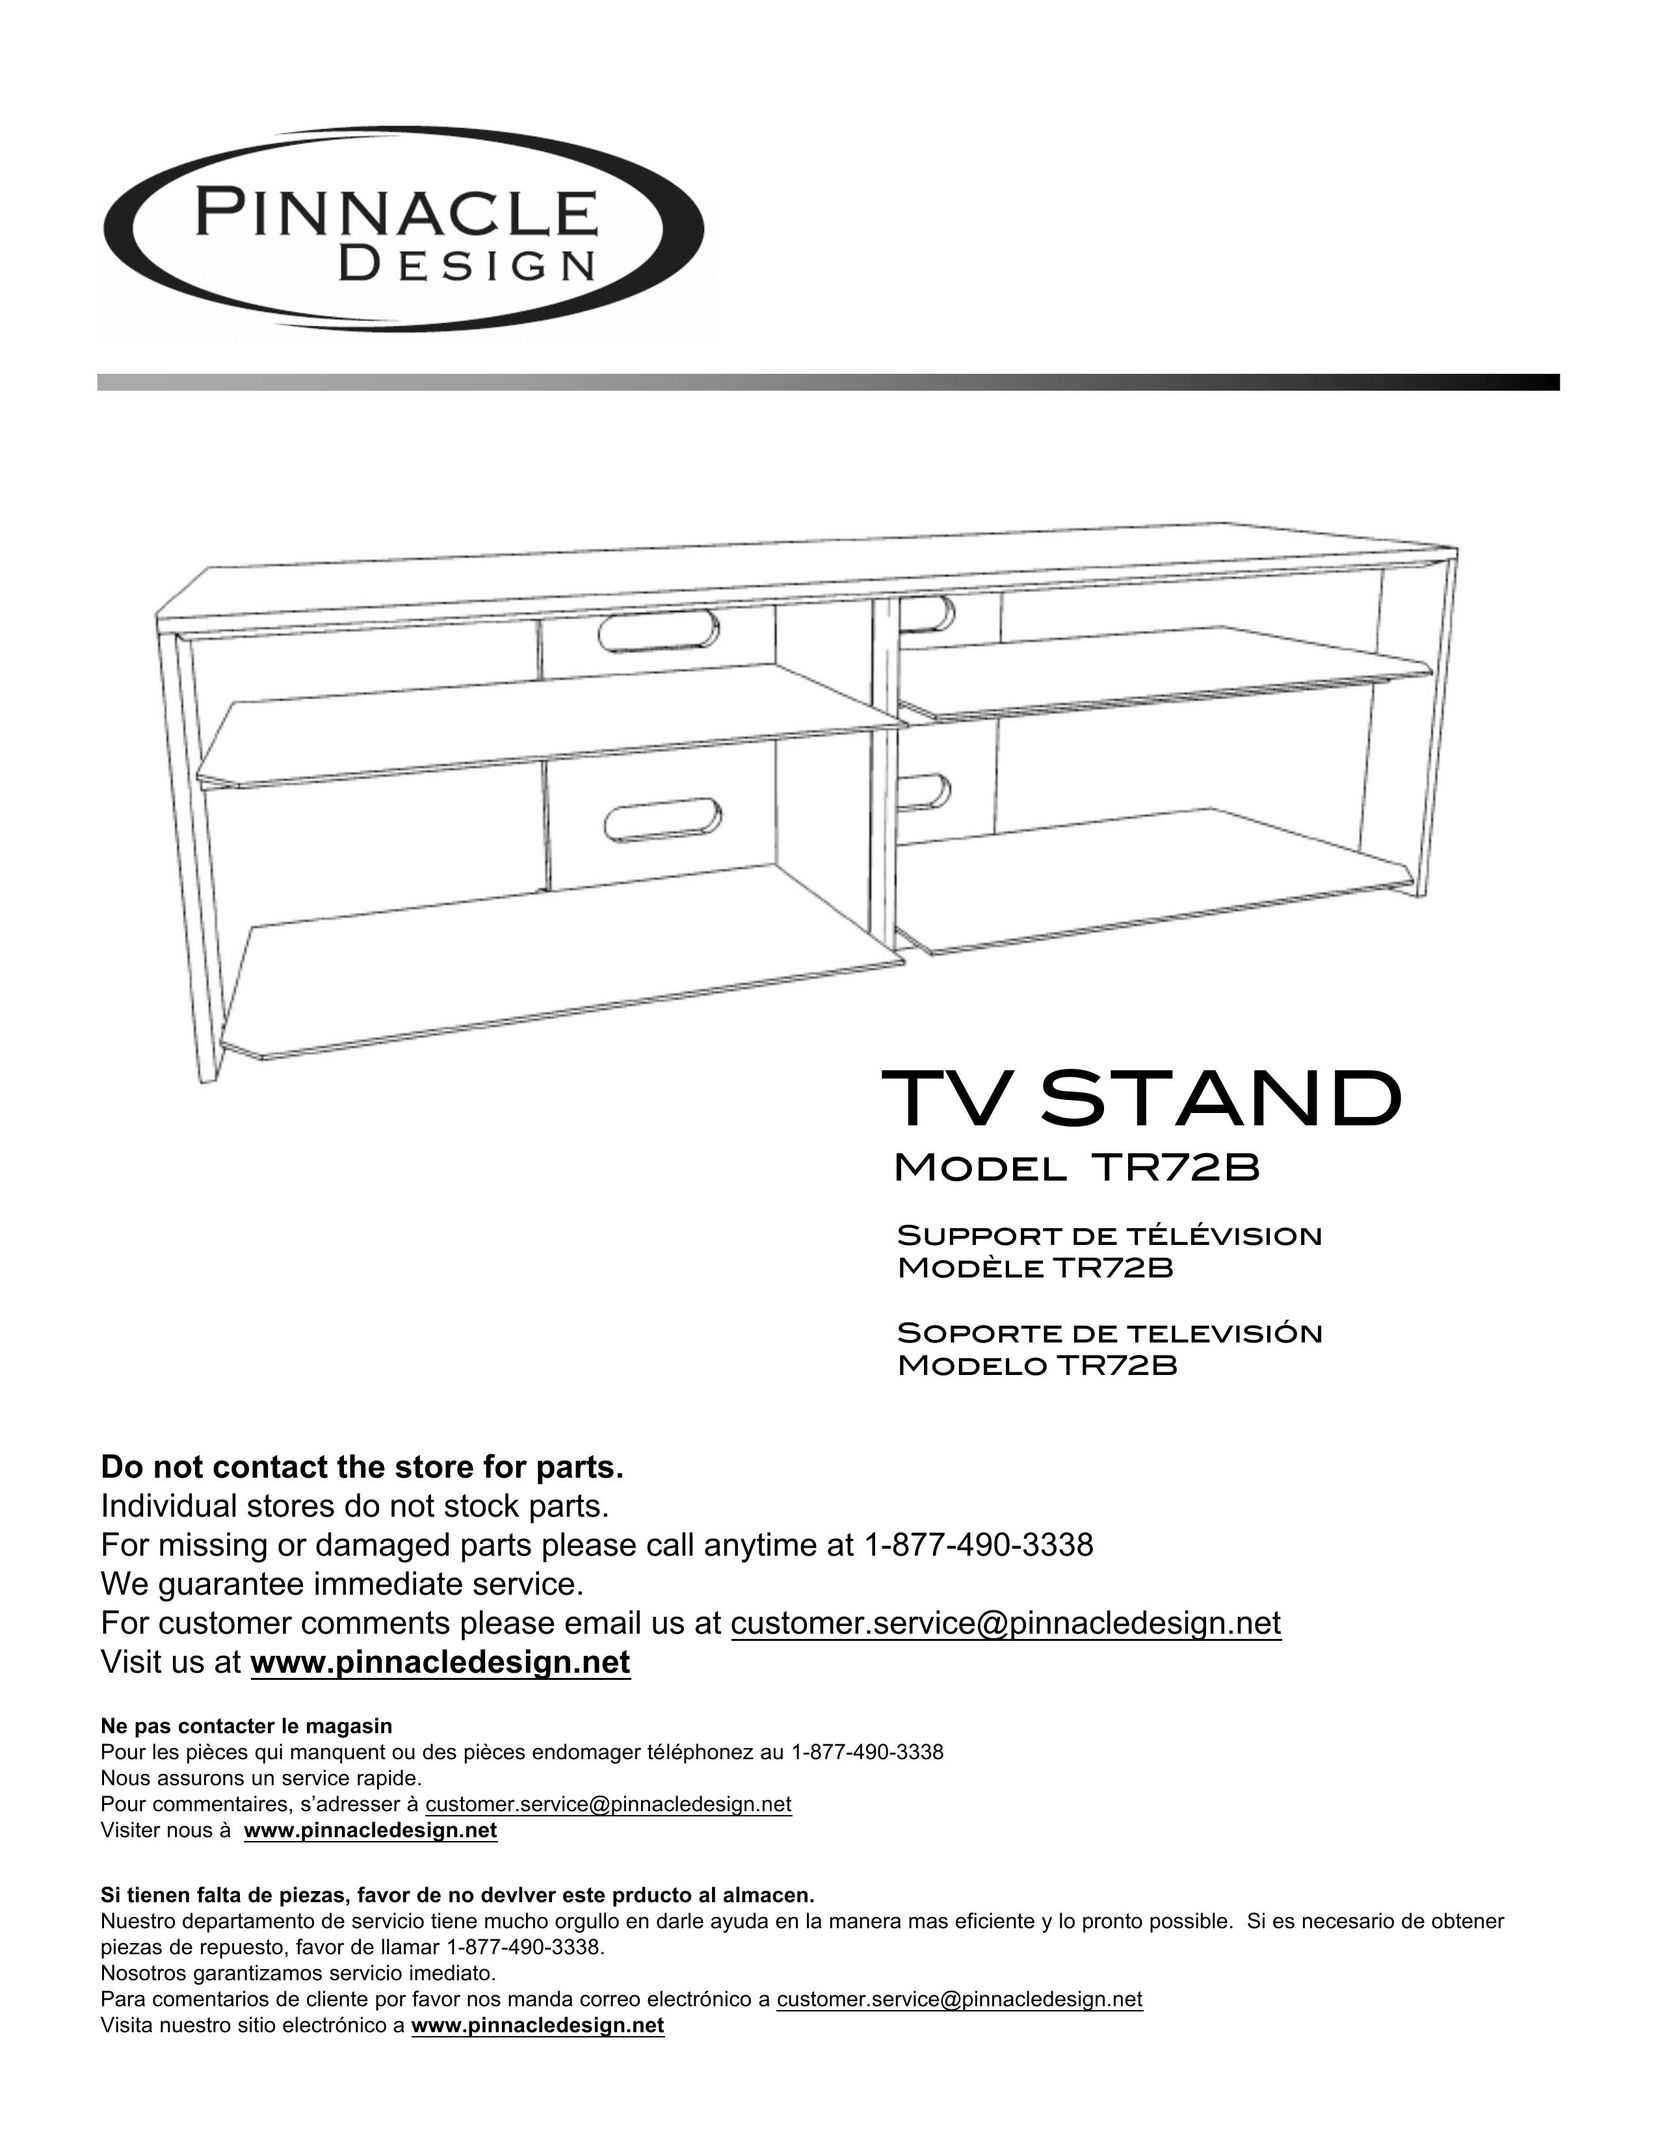 Pinnacle Design TR72B TV Video Accessories User Manual